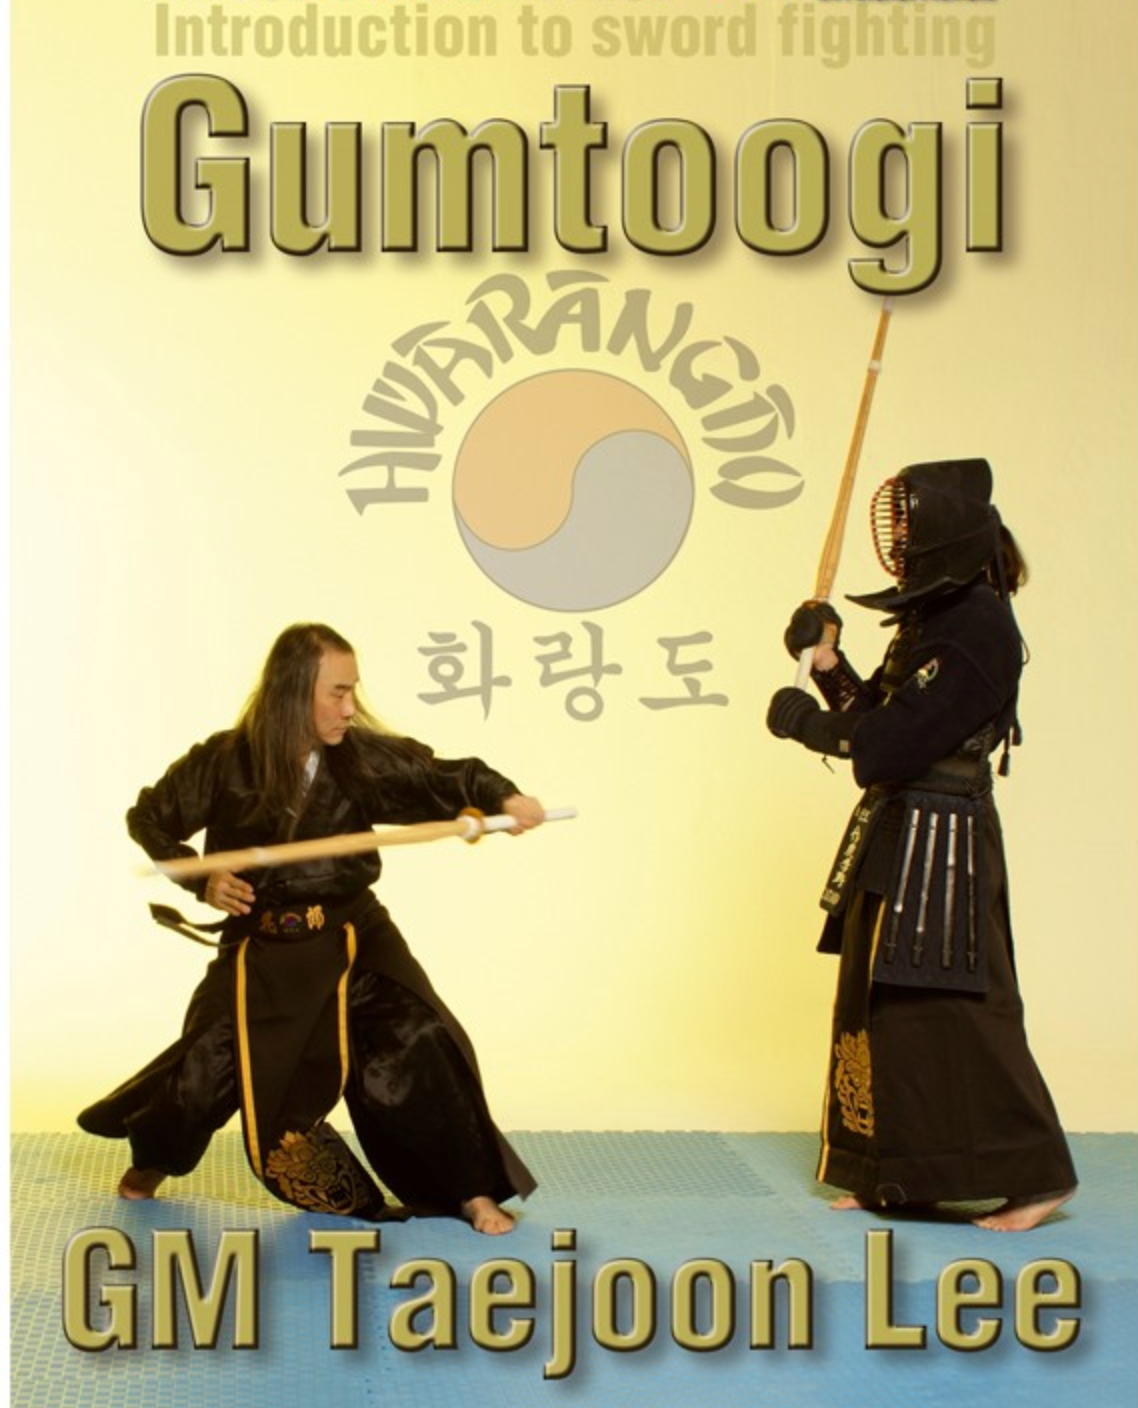 Hwa Rang Do Gumtoogi Sword Fighting DVD by Taejoon Lee - Budovideos Inc